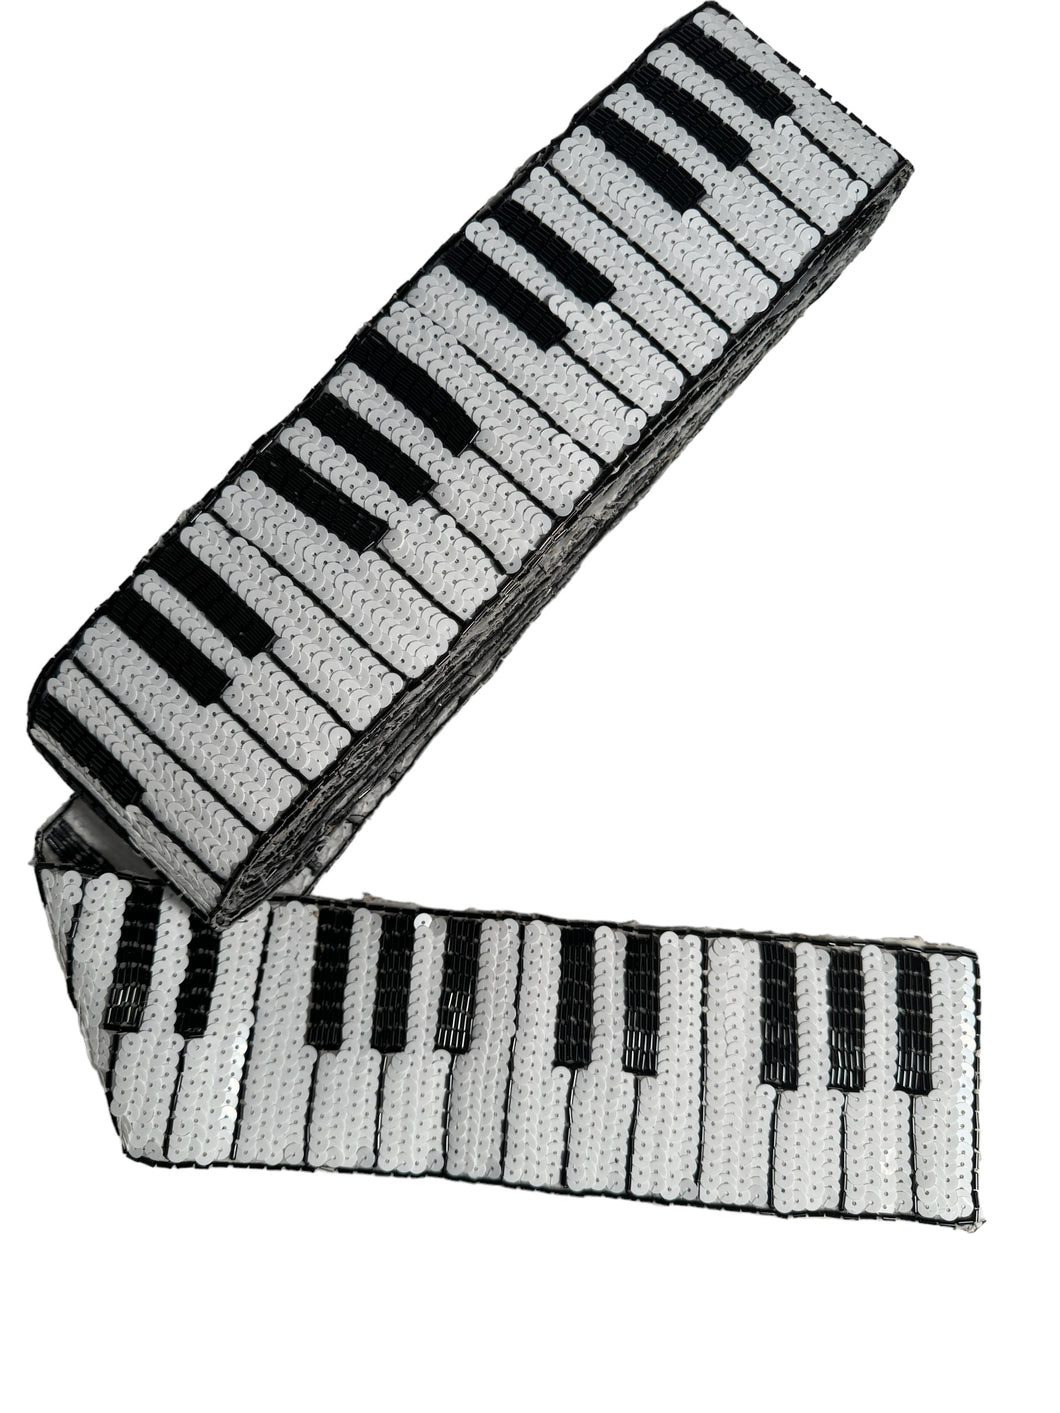 Piano Keys by the Yard 3